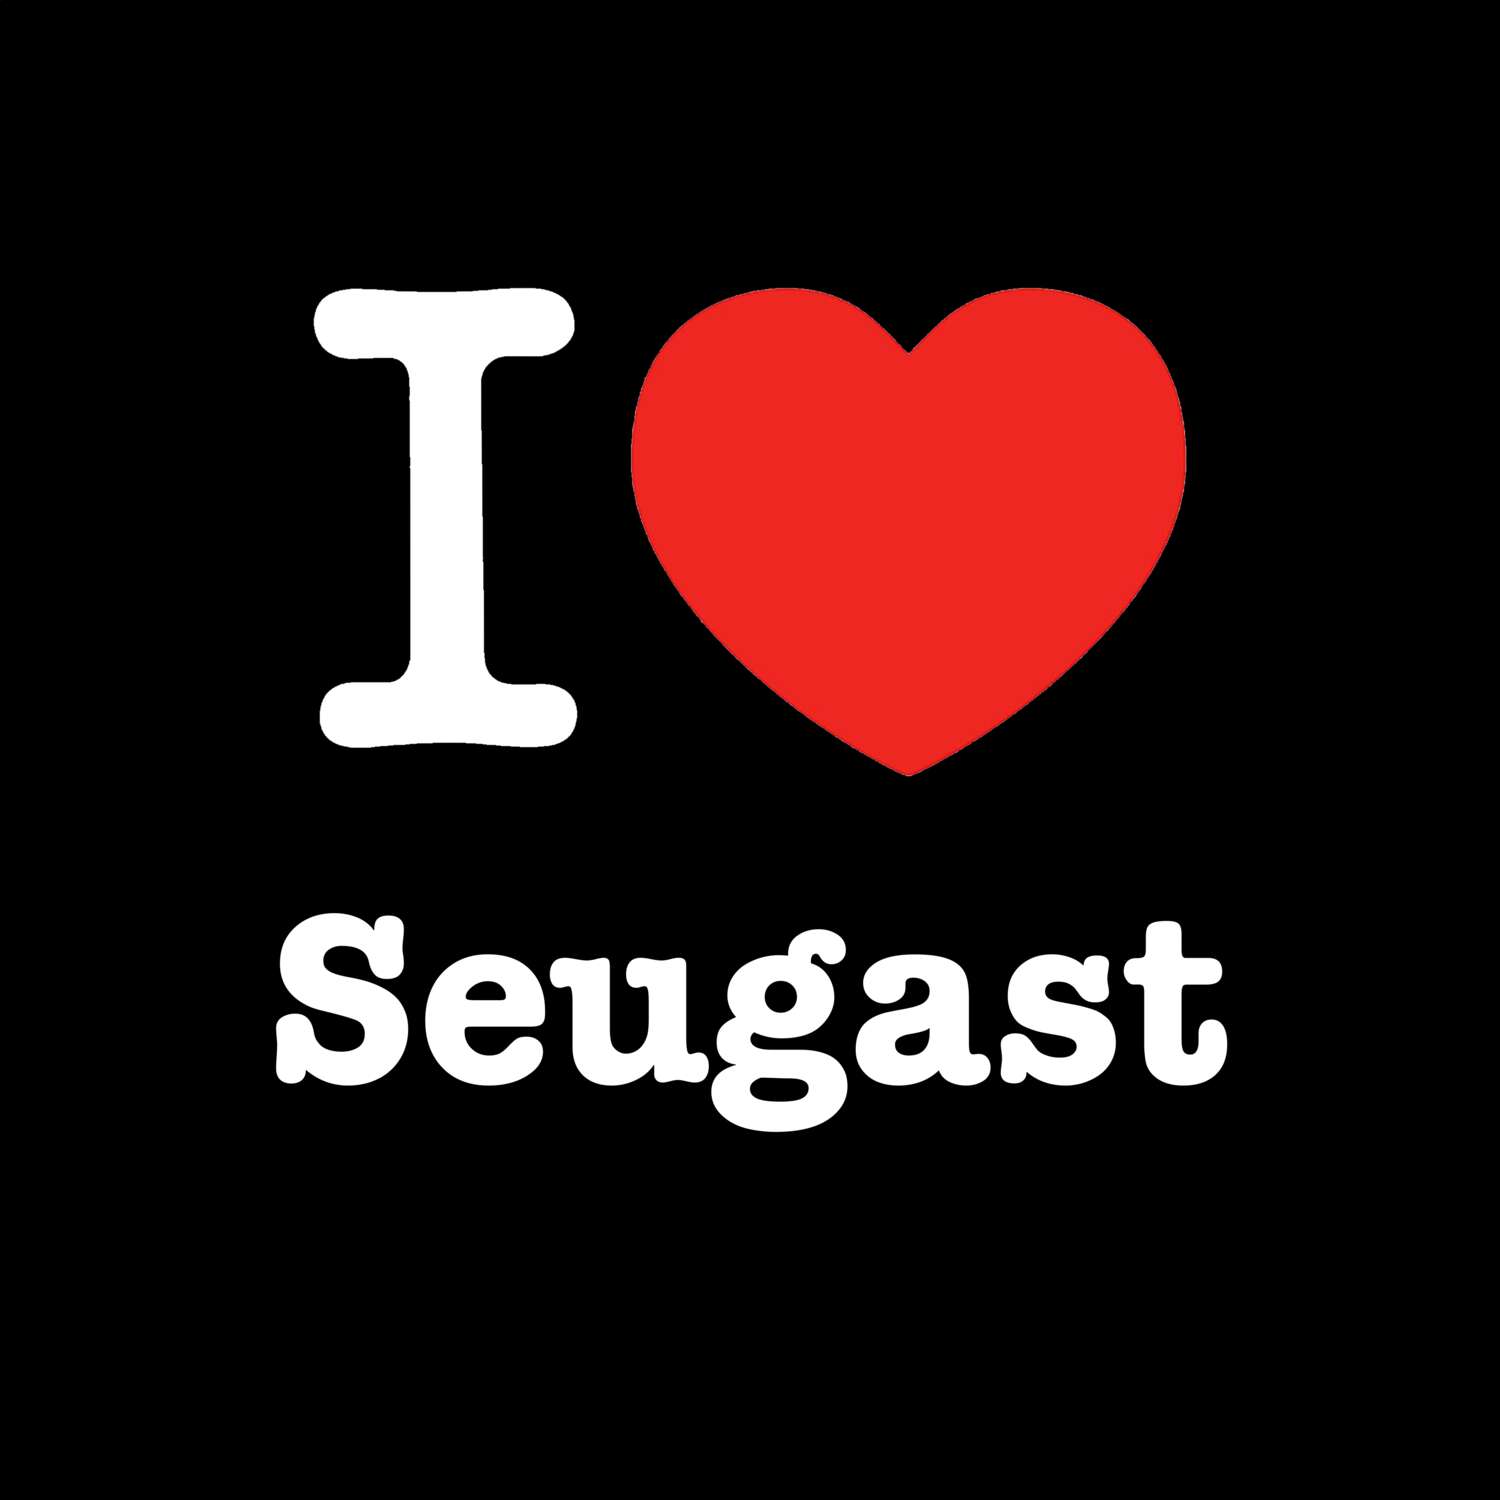 Seugast T-Shirt »I love«